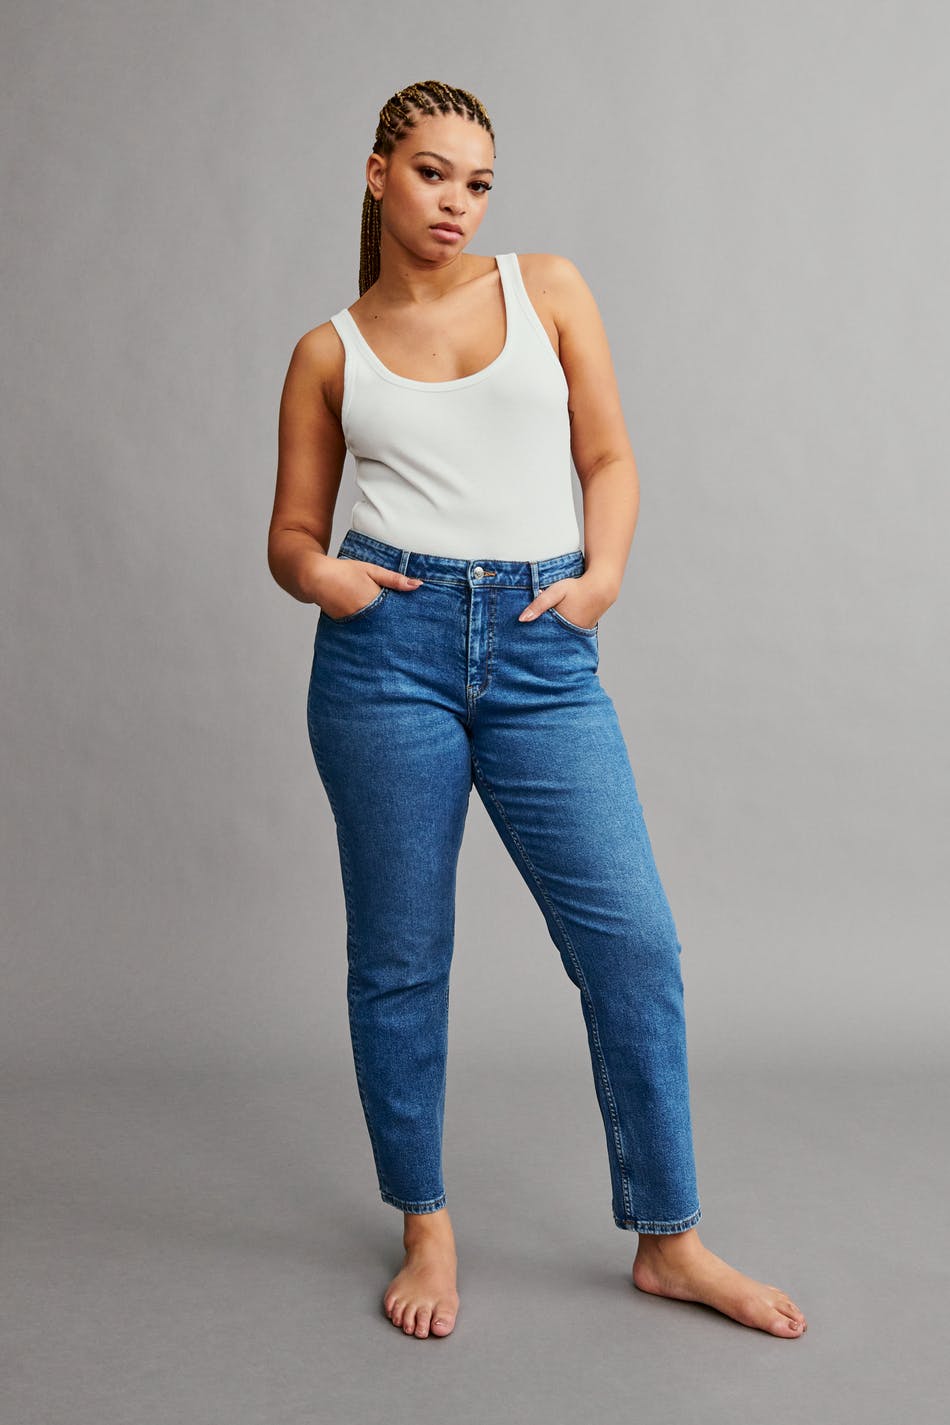 Aanpassen Voorzieningen Hesje Straight stretch jeans - Gina Tricot